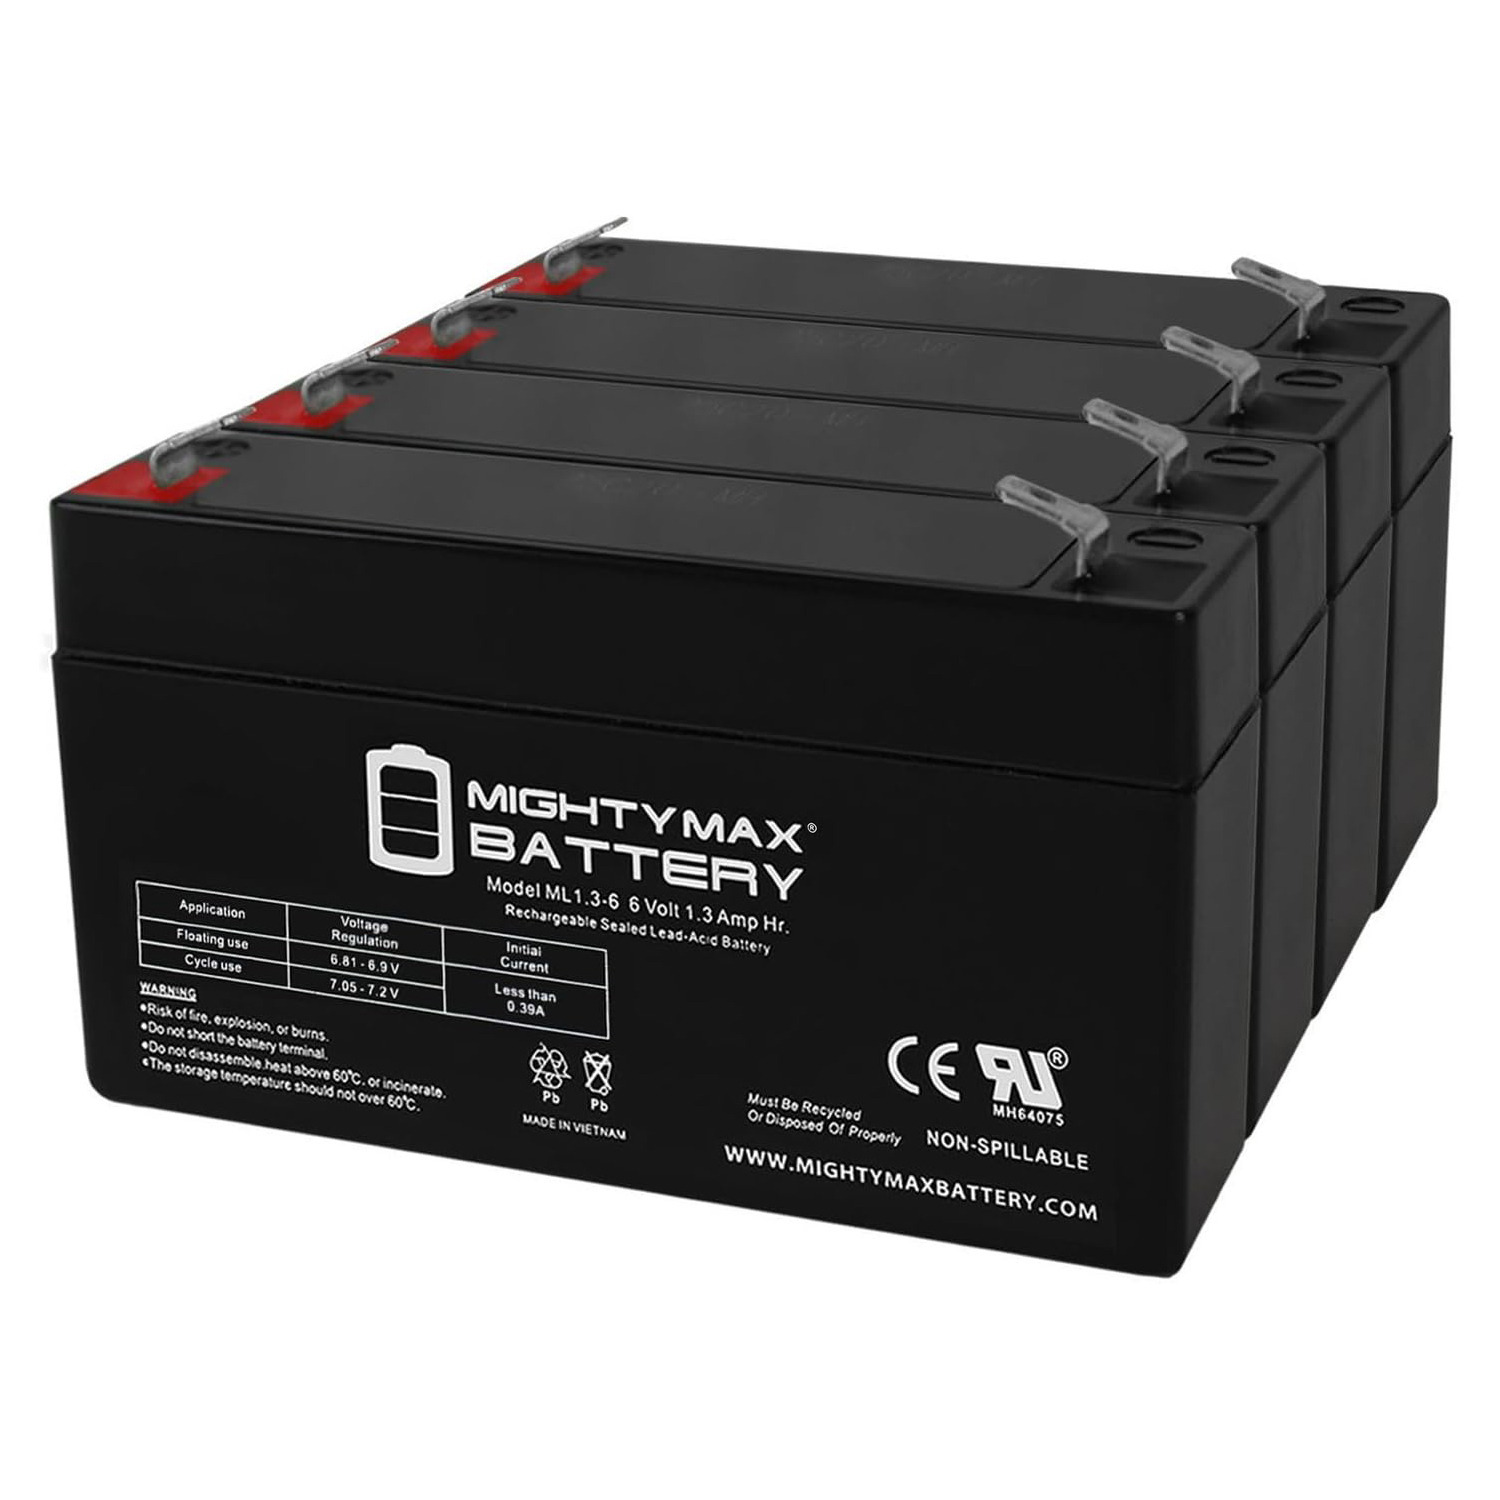 6V 1.3Ah Sonnenschein 7190182 Emergency Light Battery - 4 Pack